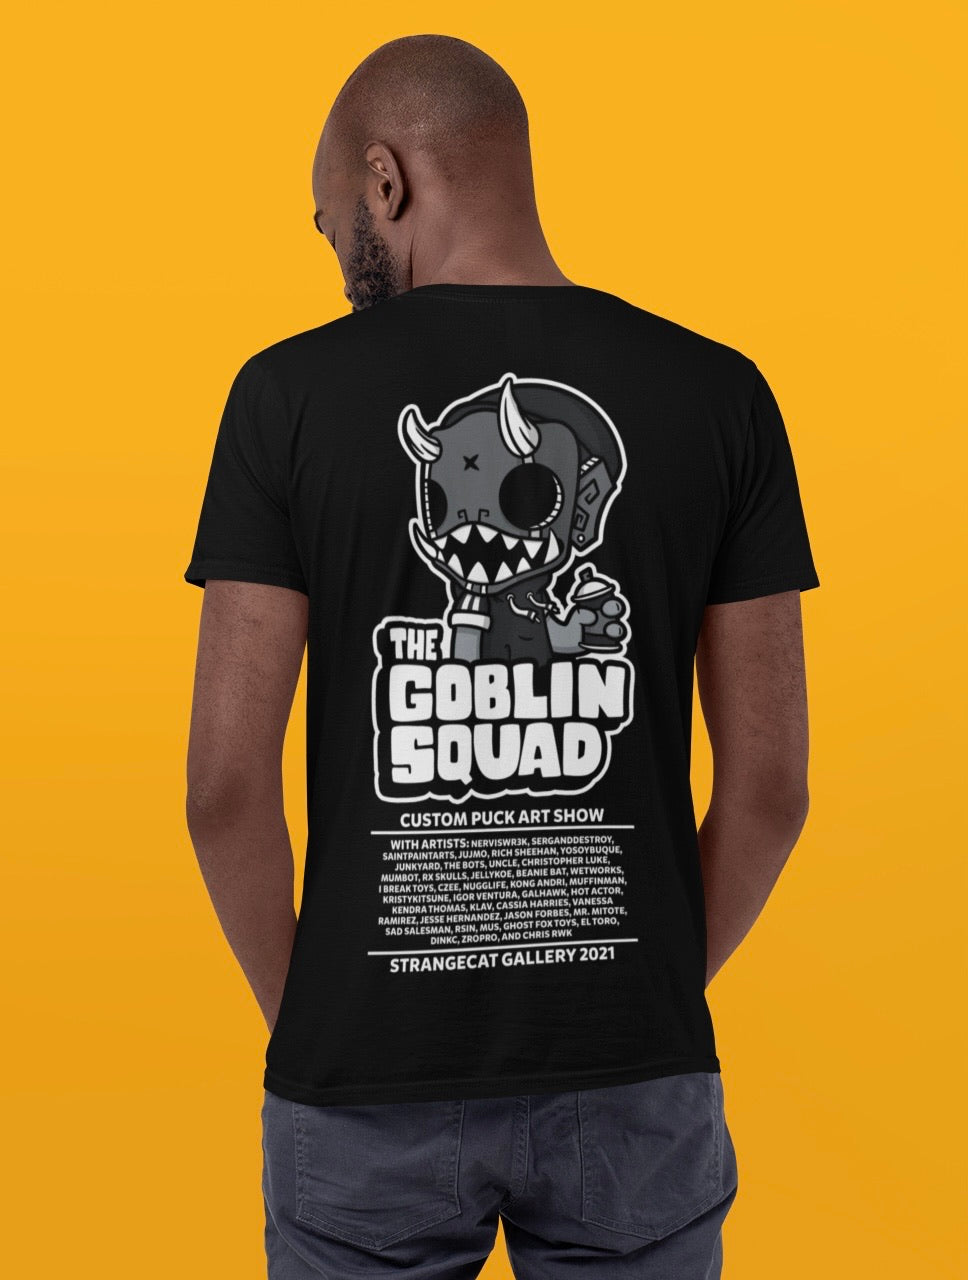 Goblin Squad Shirt by Chris Dokebi